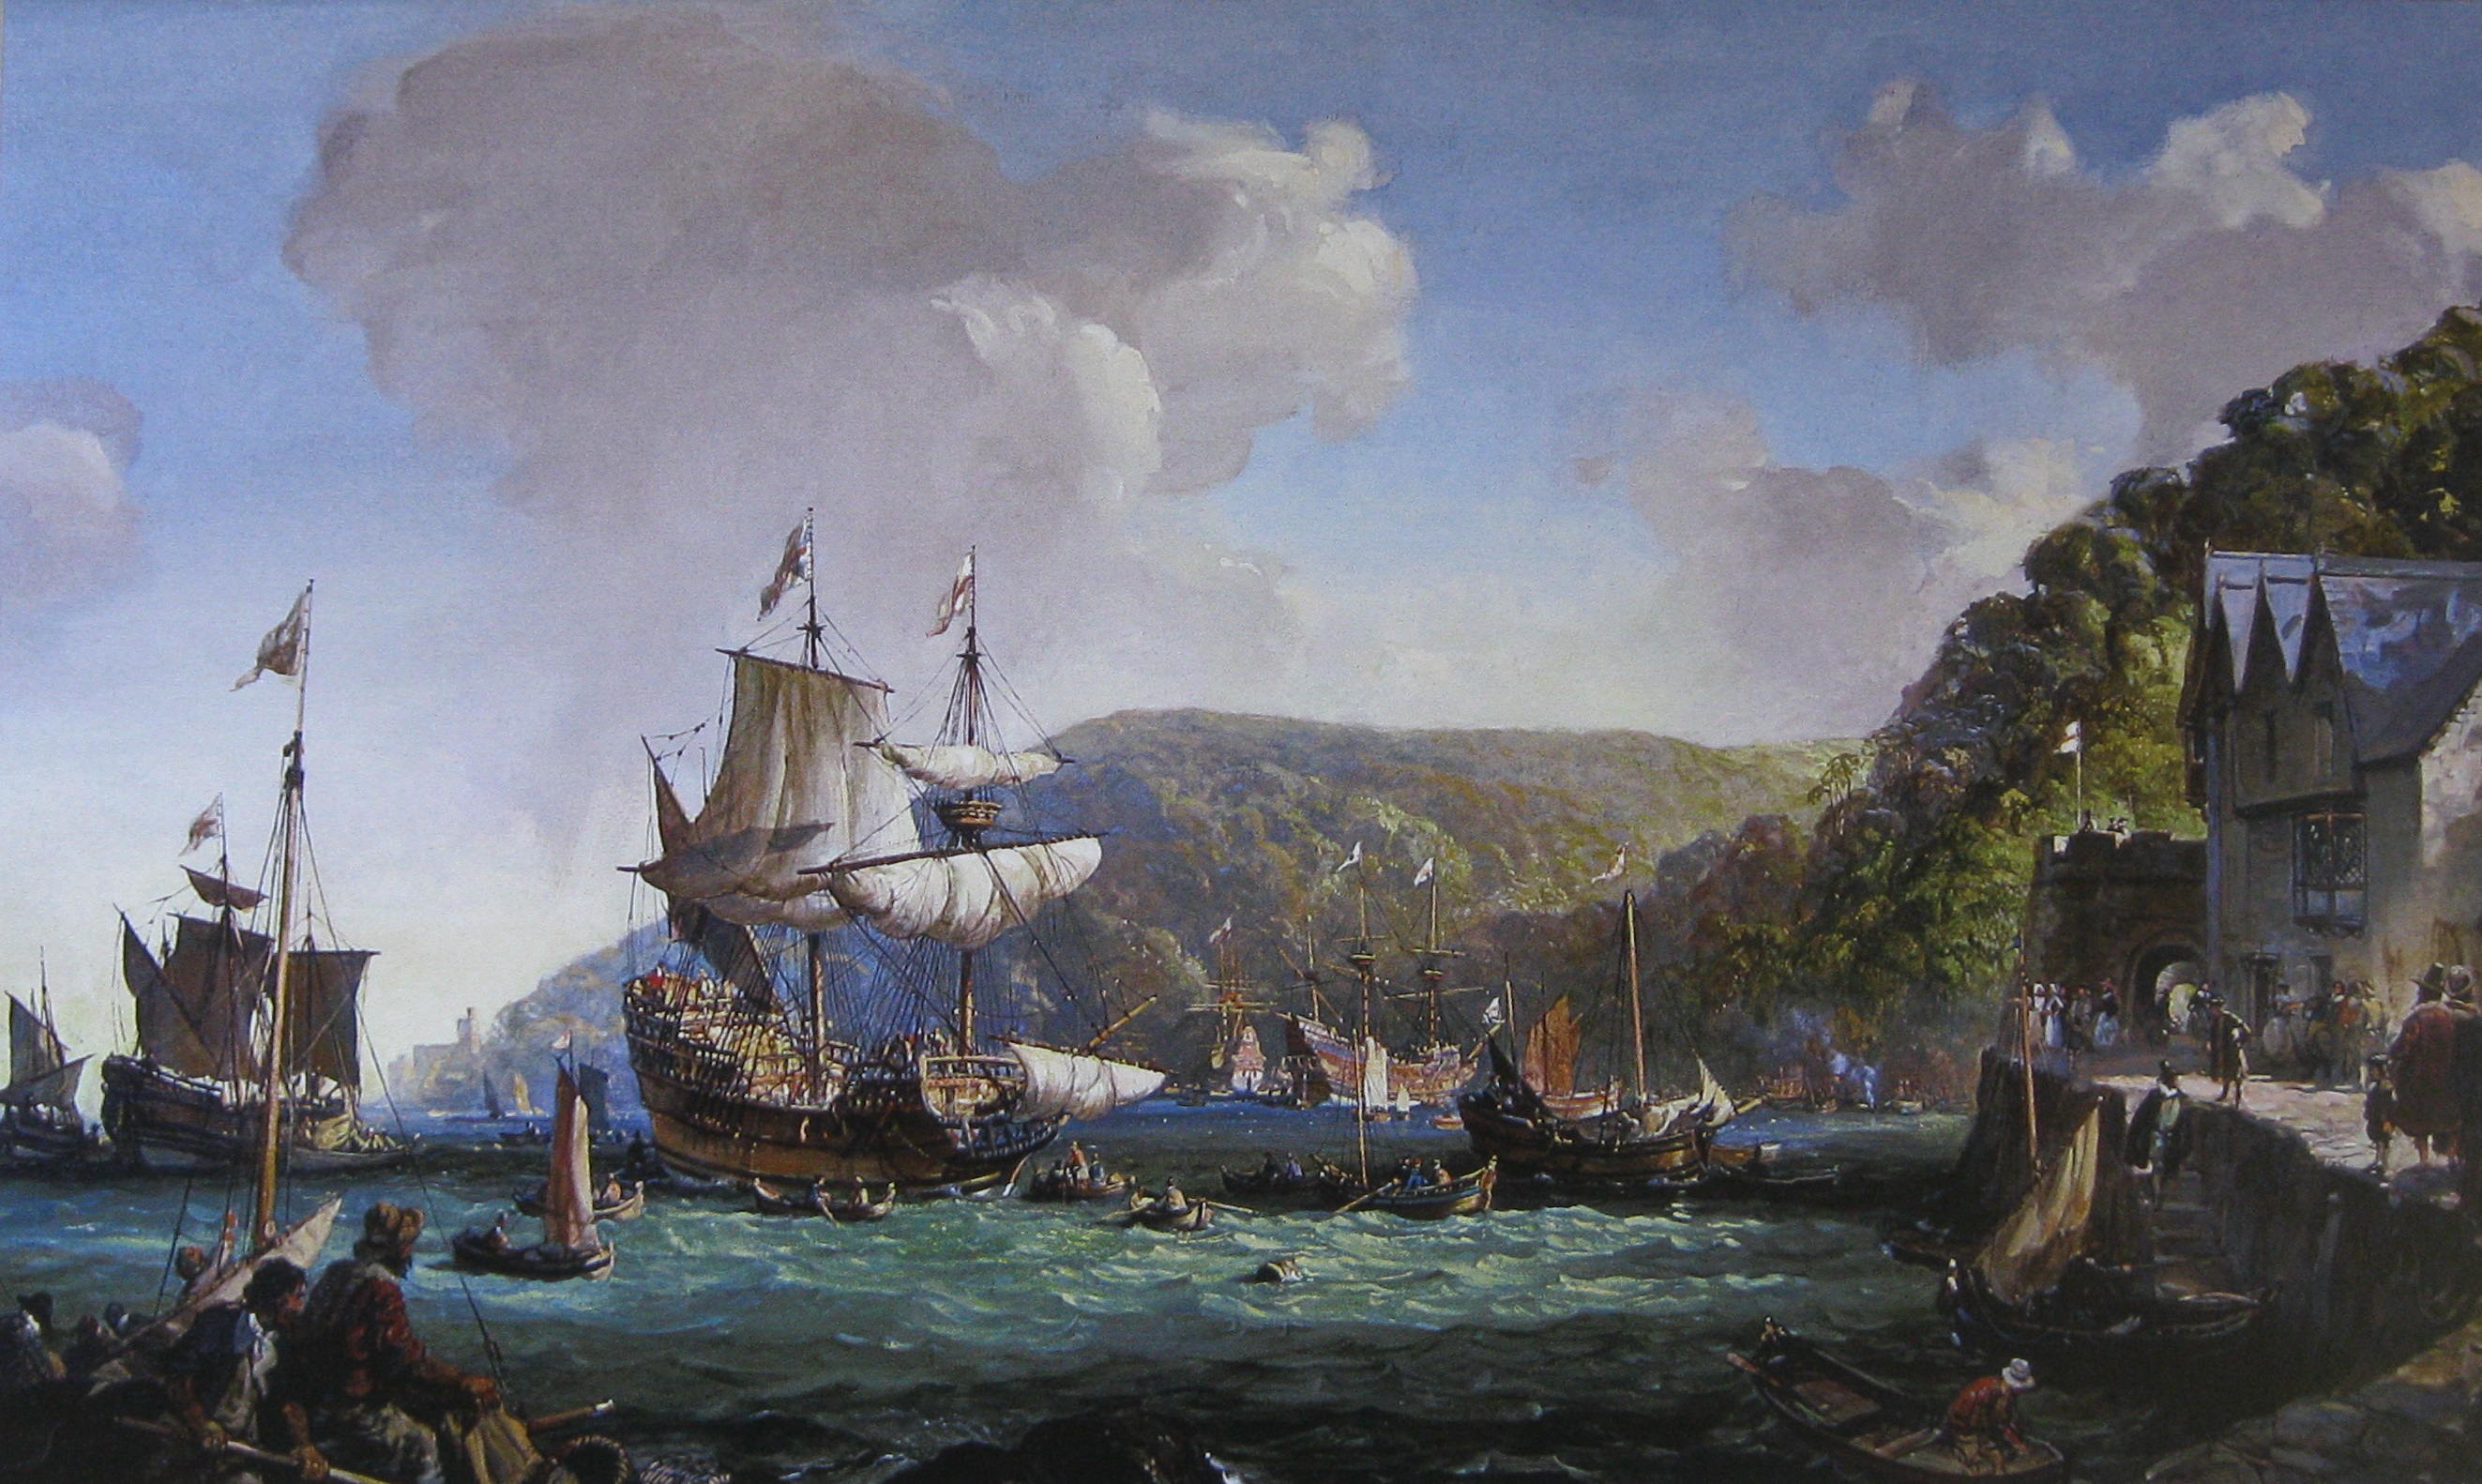 The ship sailed across. Корабль Мэйфлауэр 1620. Мэйфлауэр корабль первых колонистов. Корабль пилигримов Mayflower. Мэйфлауэр Пилигримы.